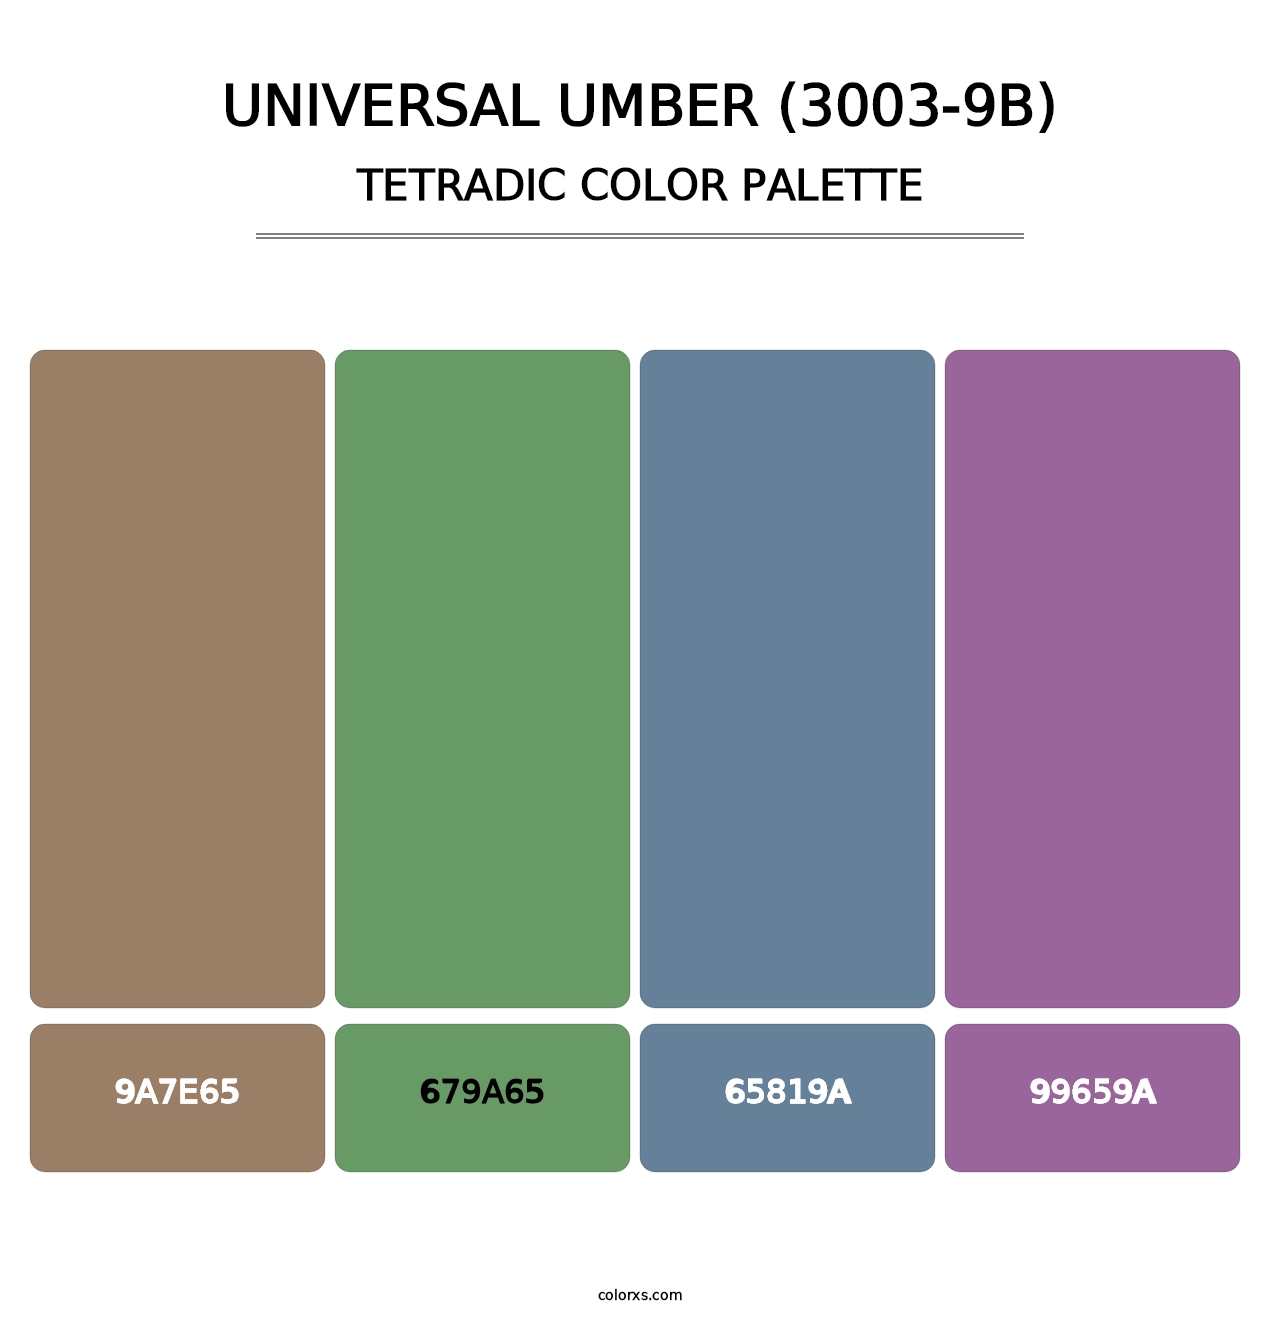 Universal Umber (3003-9B) - Tetradic Color Palette